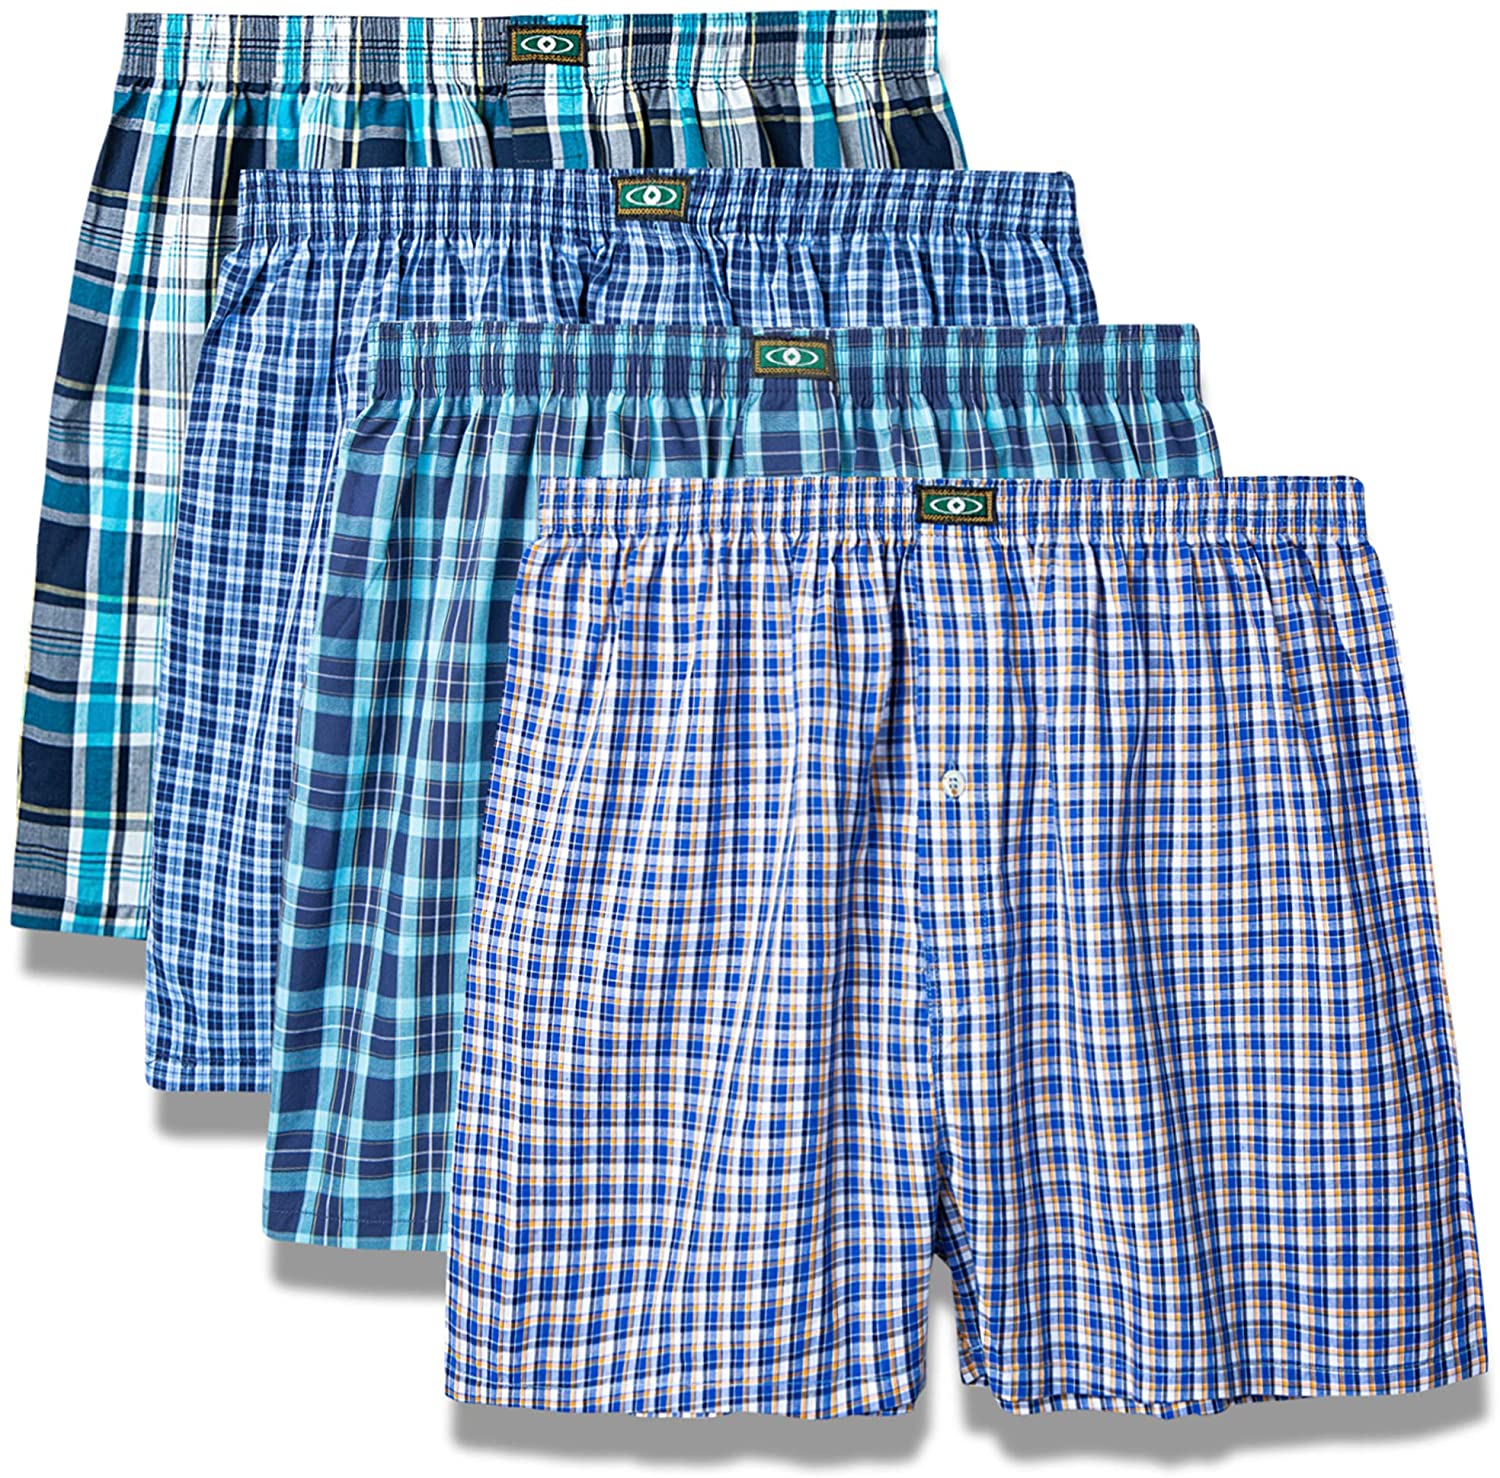 Men’s 2 Pack 100% Cotton Woven Beige Polka Boxer Shorts Size Medium 30-34 Waist 